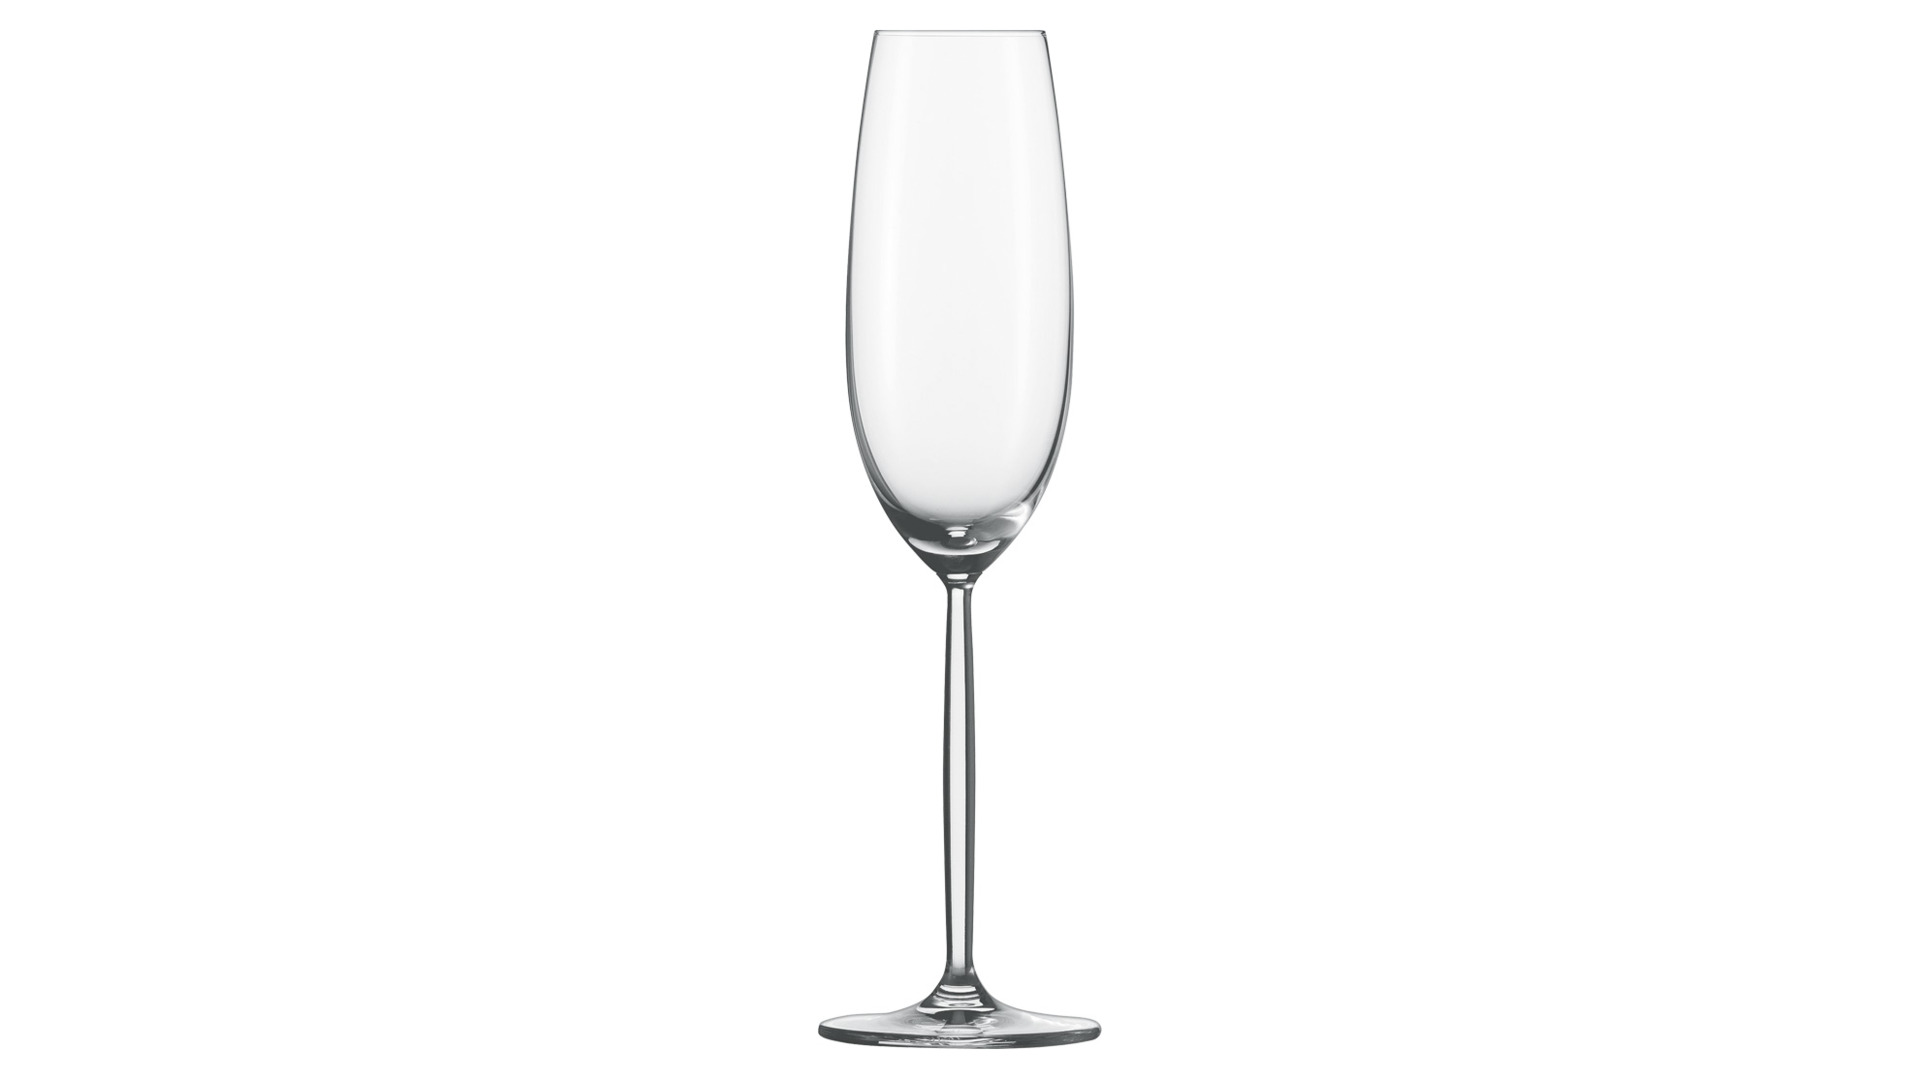 Набор бокалов для шампанского Schott Zwiesel Дива 219мл, 6шт